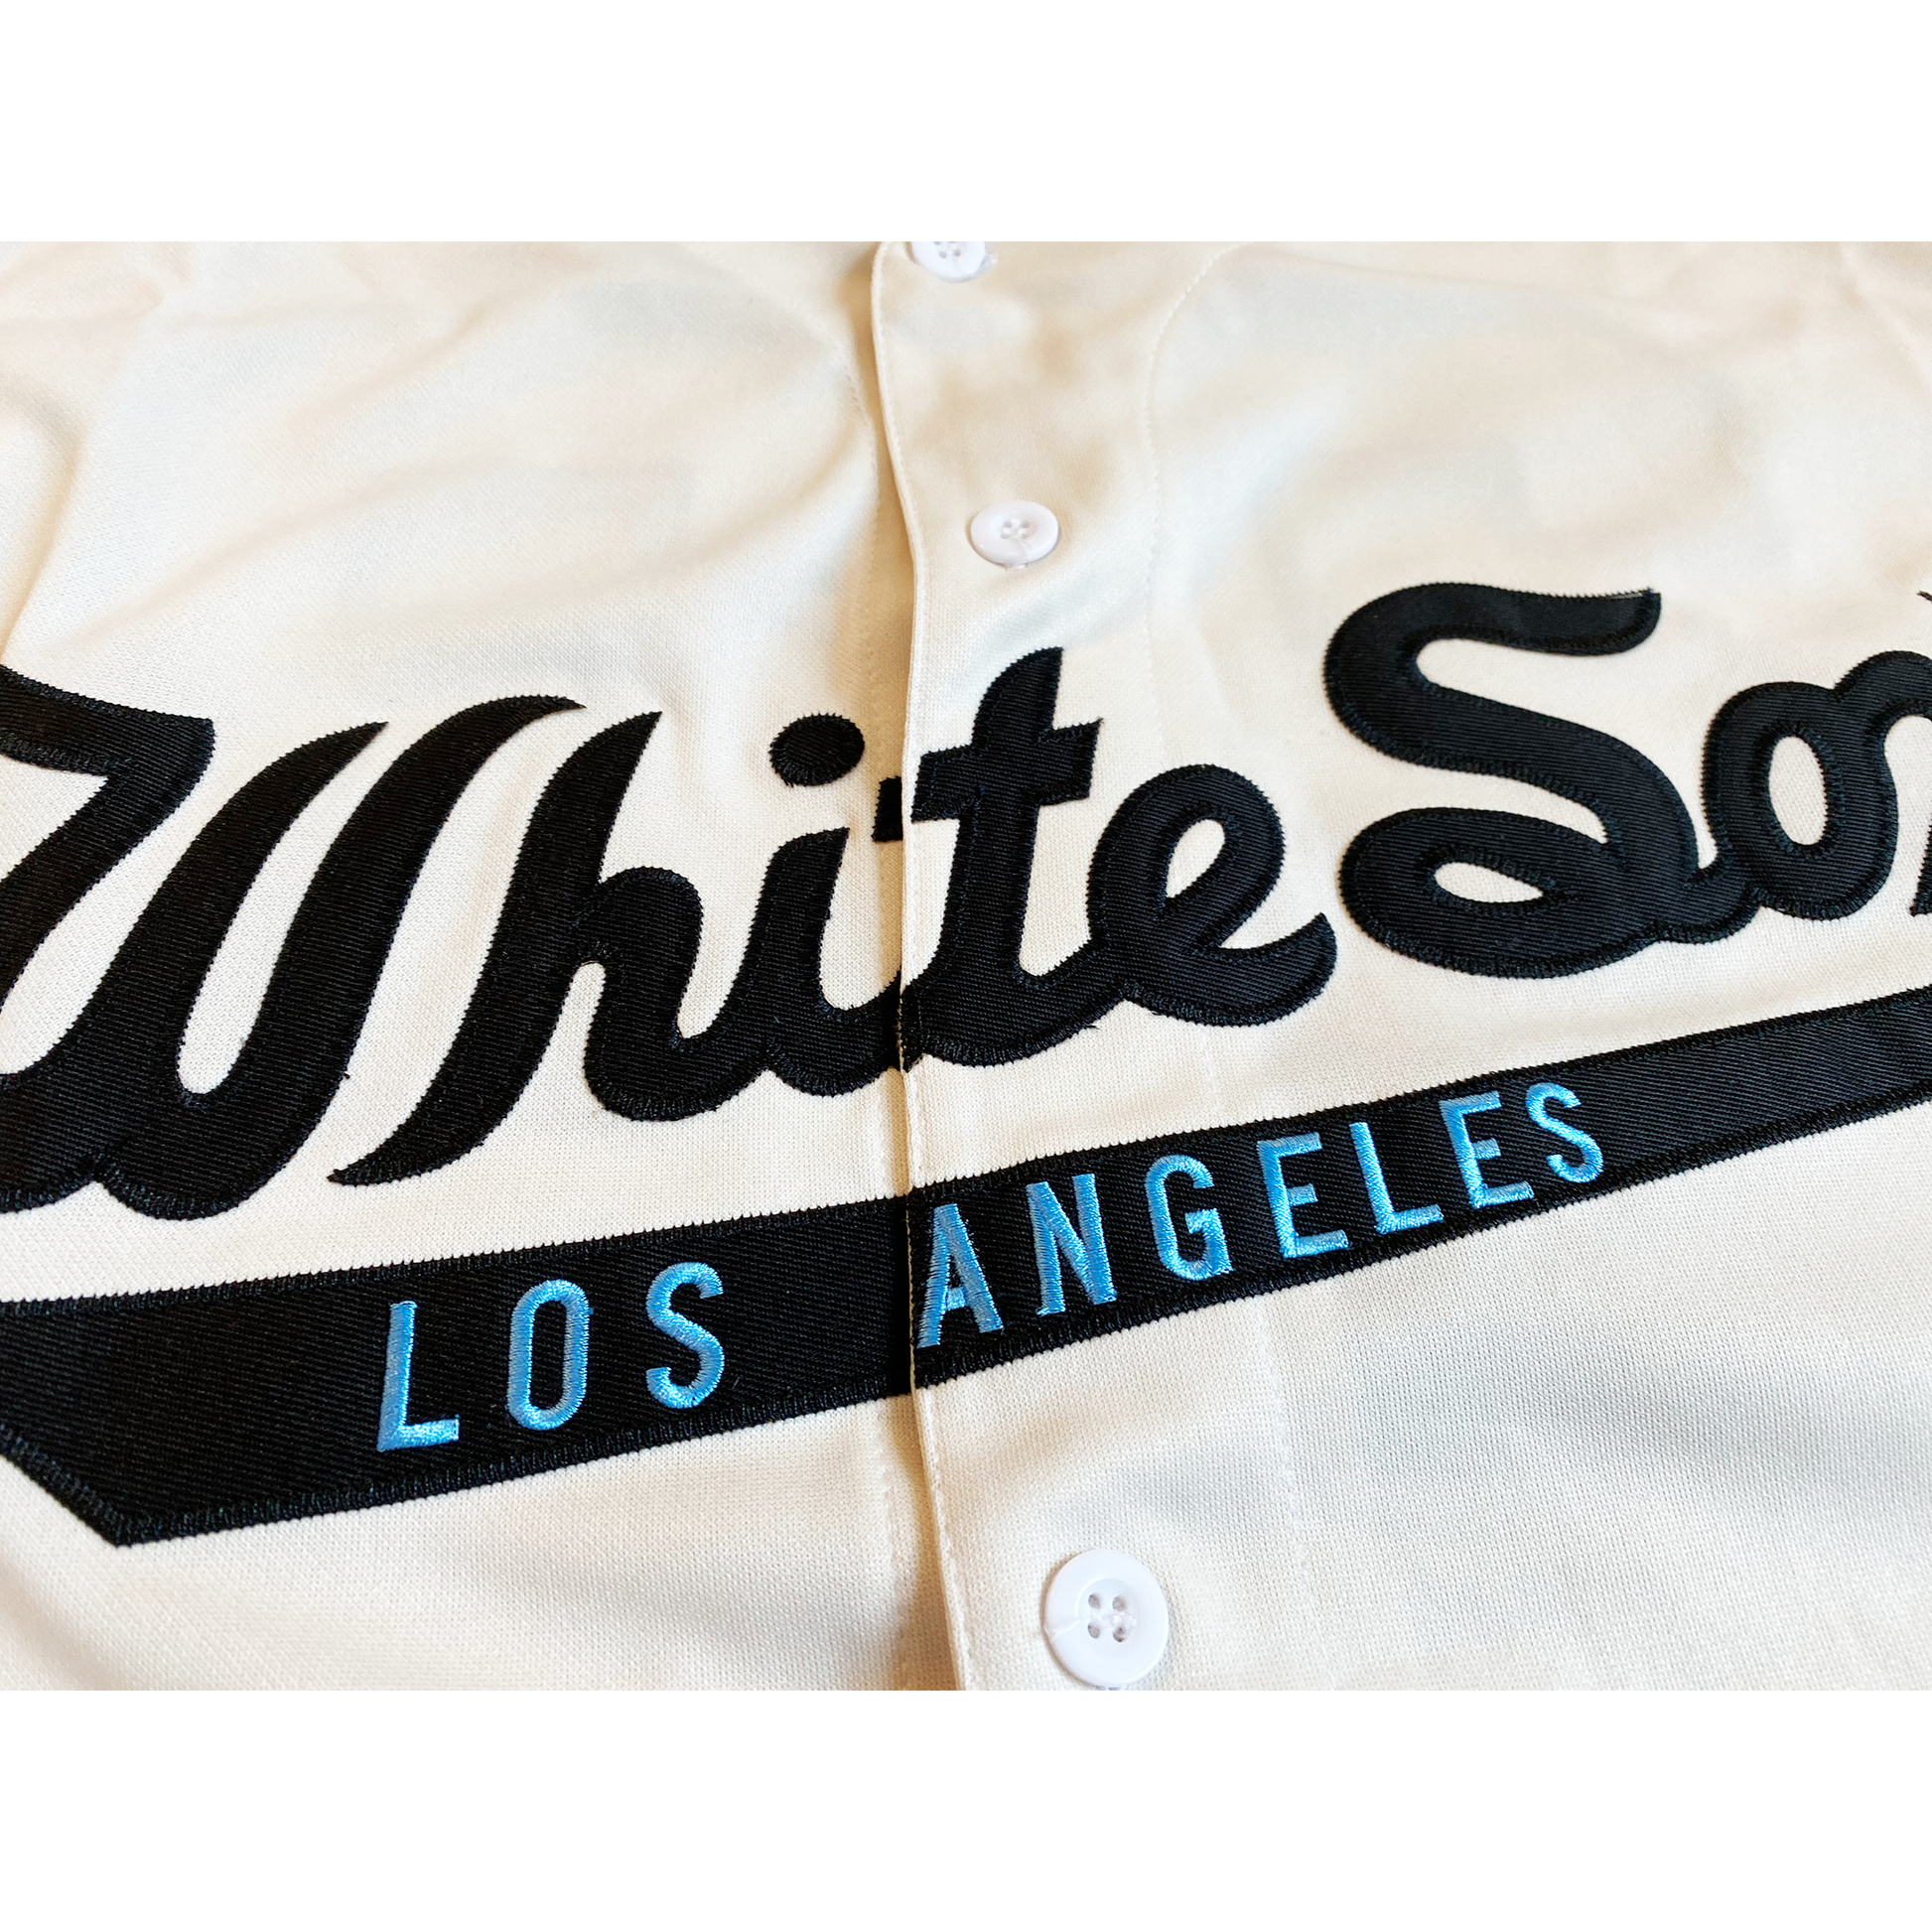 1987 white sox jersey